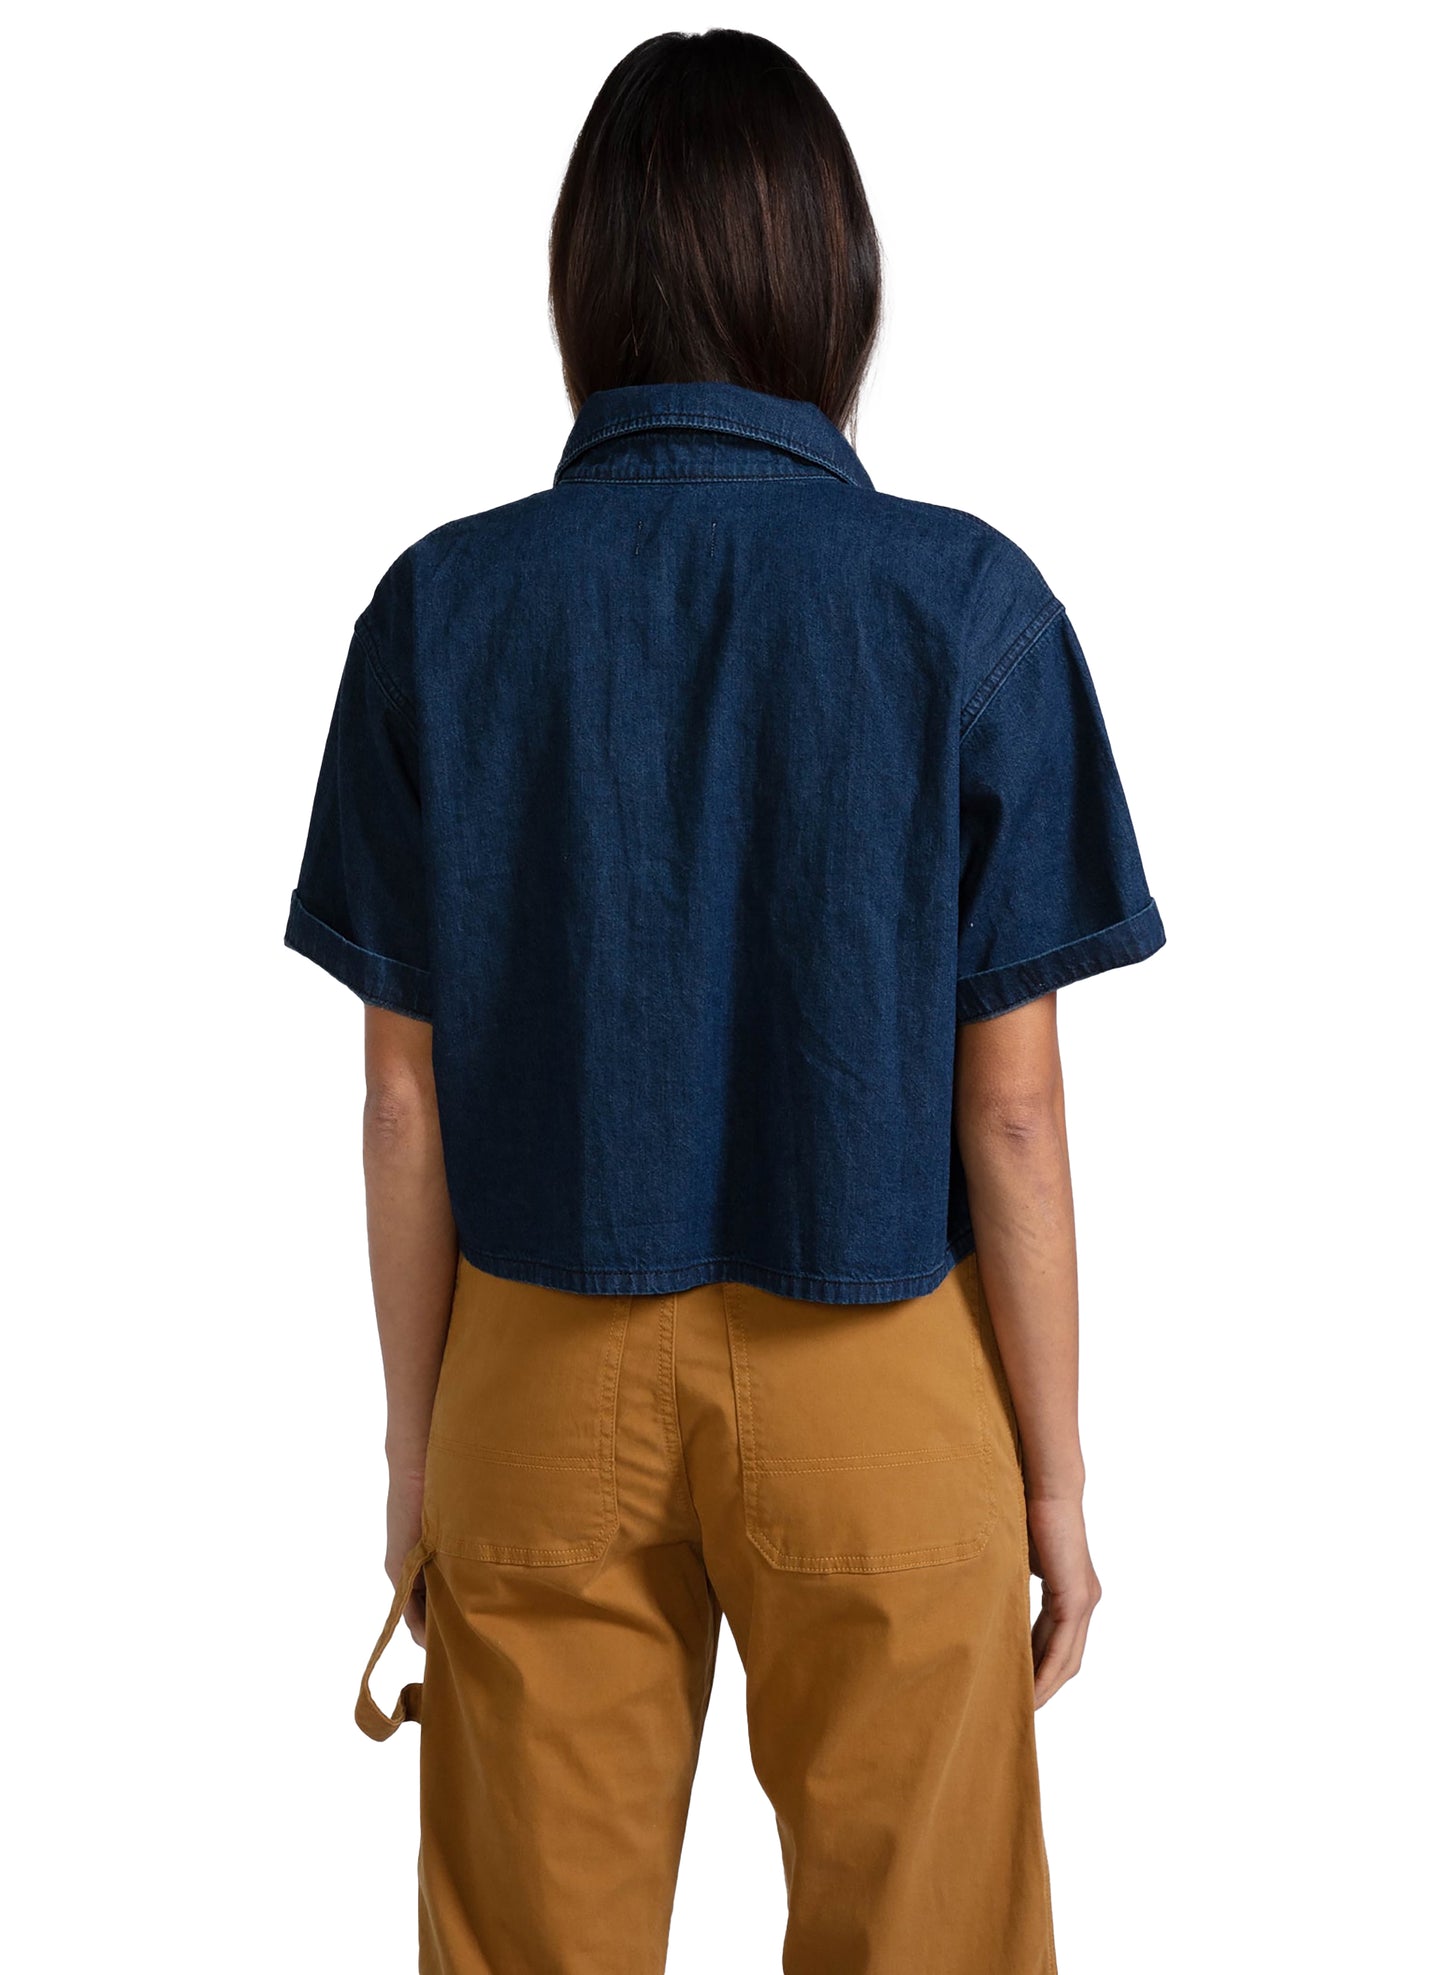 ASKK NY Short Sleeves Denim Shirt - Bruiser